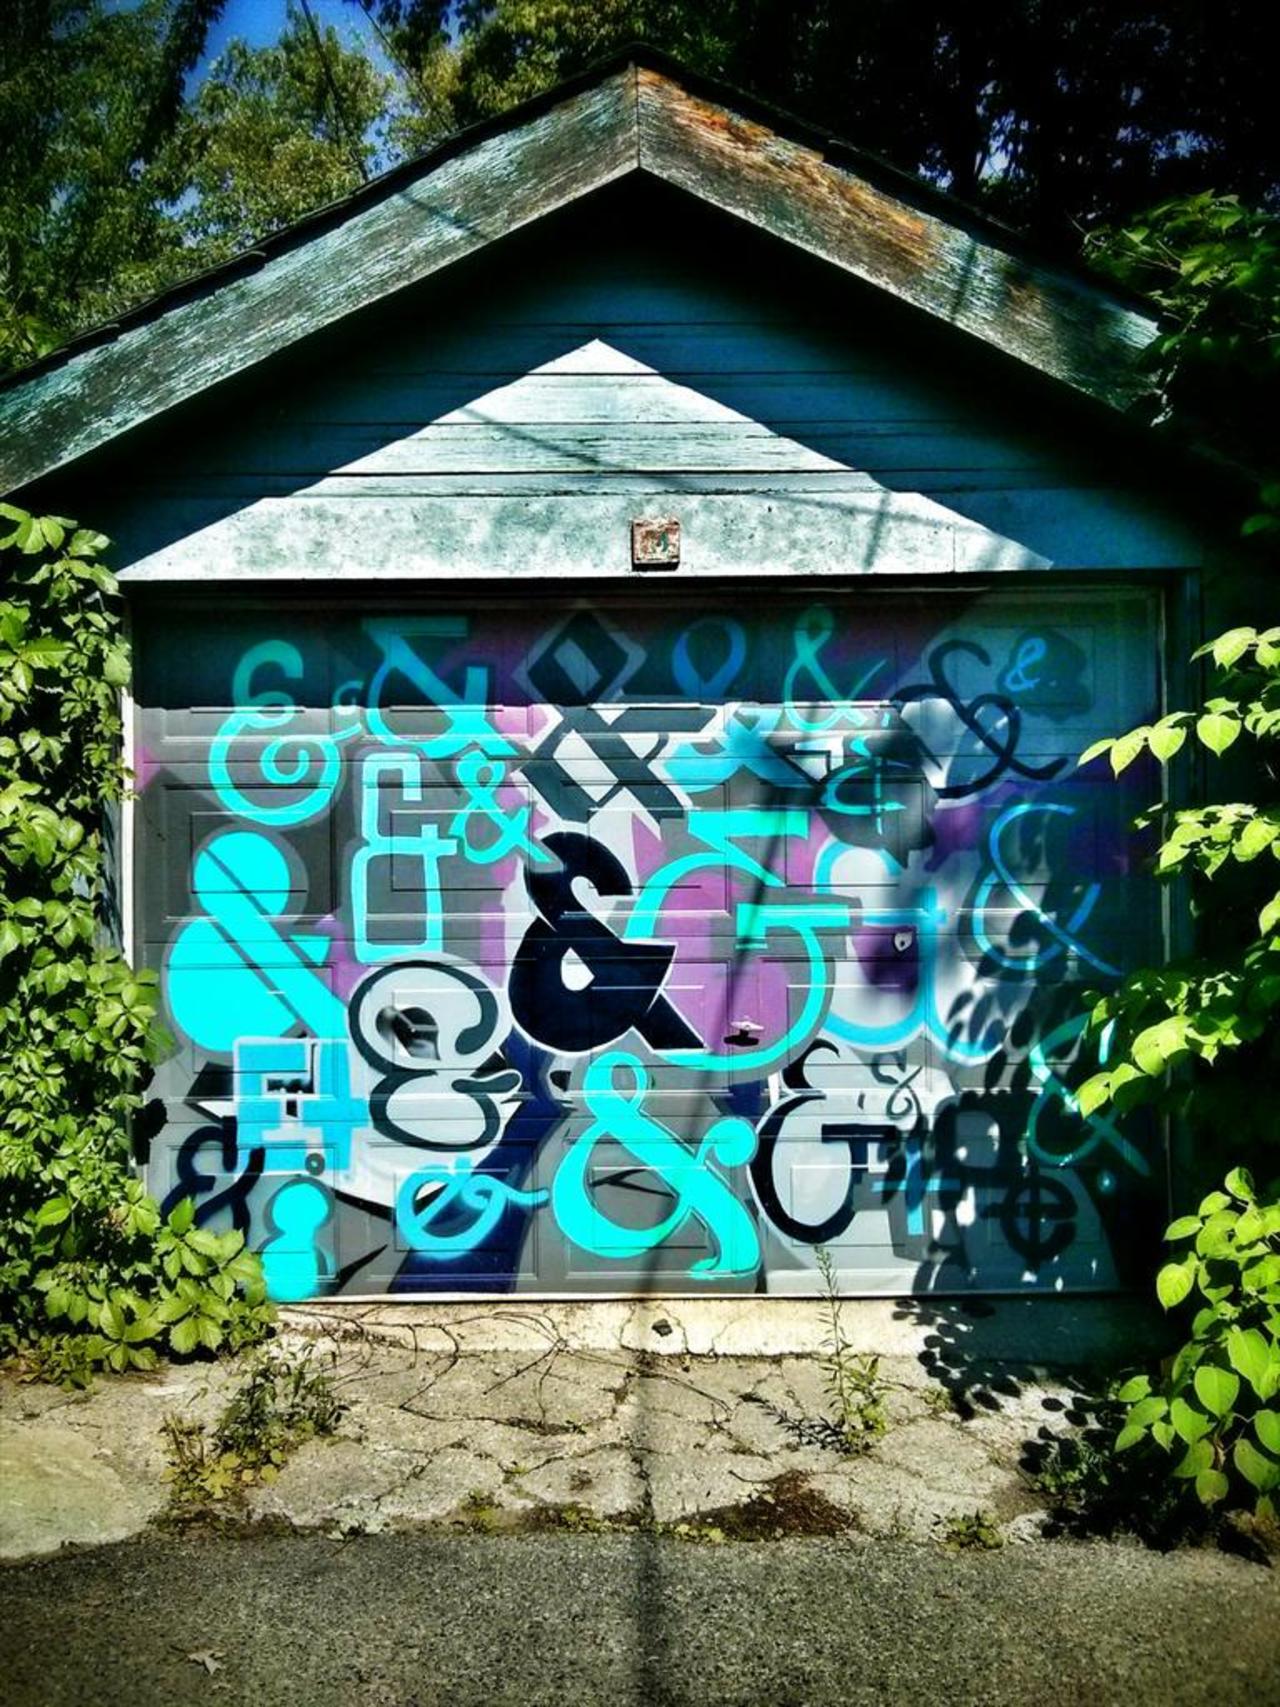 RT @Catjk68: Ampersand.
#streetart #urbanart #graffiti http://t.co/T21E9mc8zO